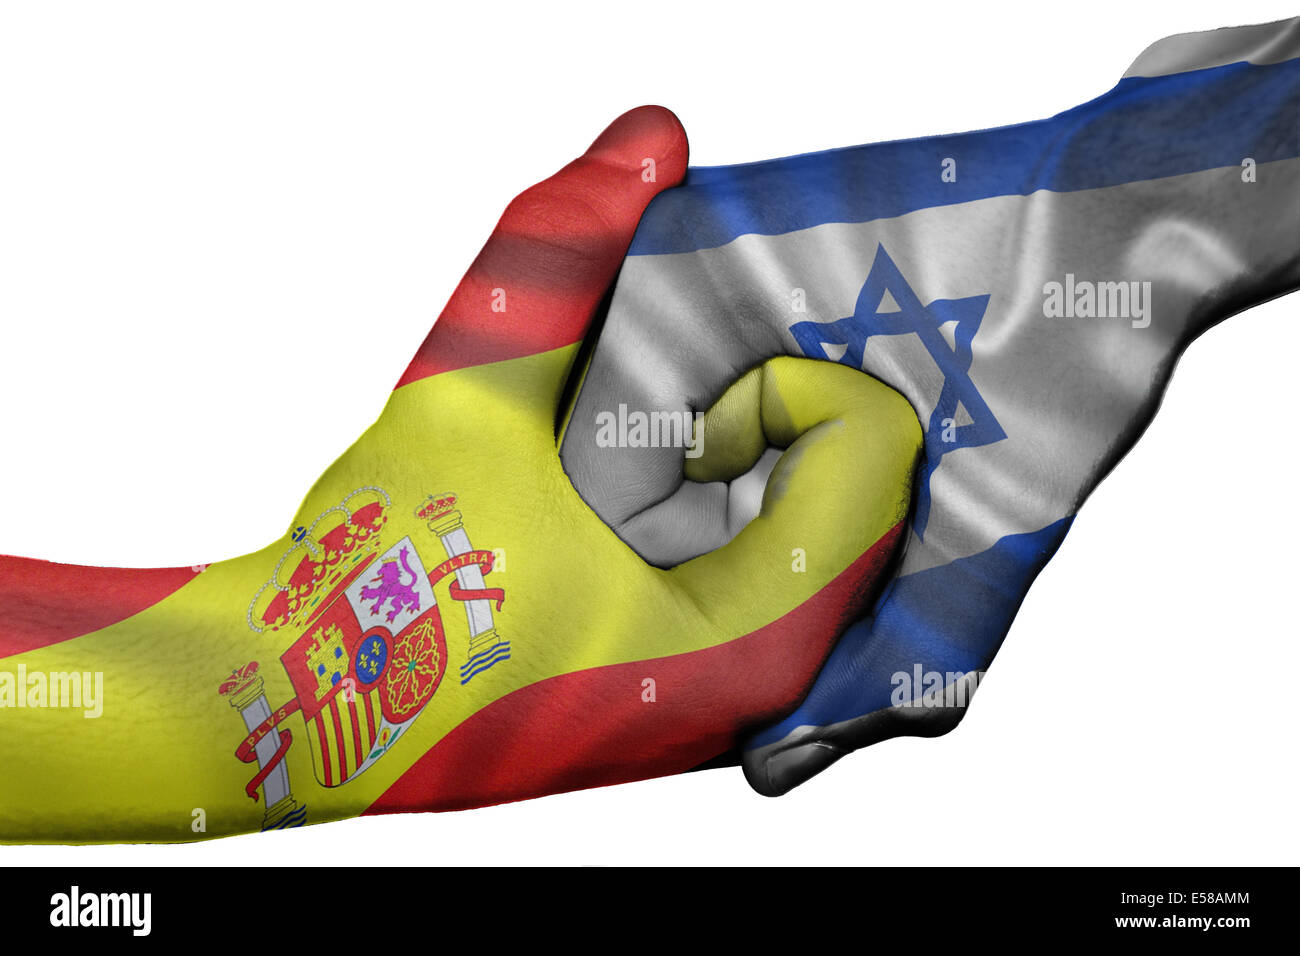 Handshake diplomatiche tra paesi: bandiere di Spagna ed Israele sovradipinta le due mani Foto Stock